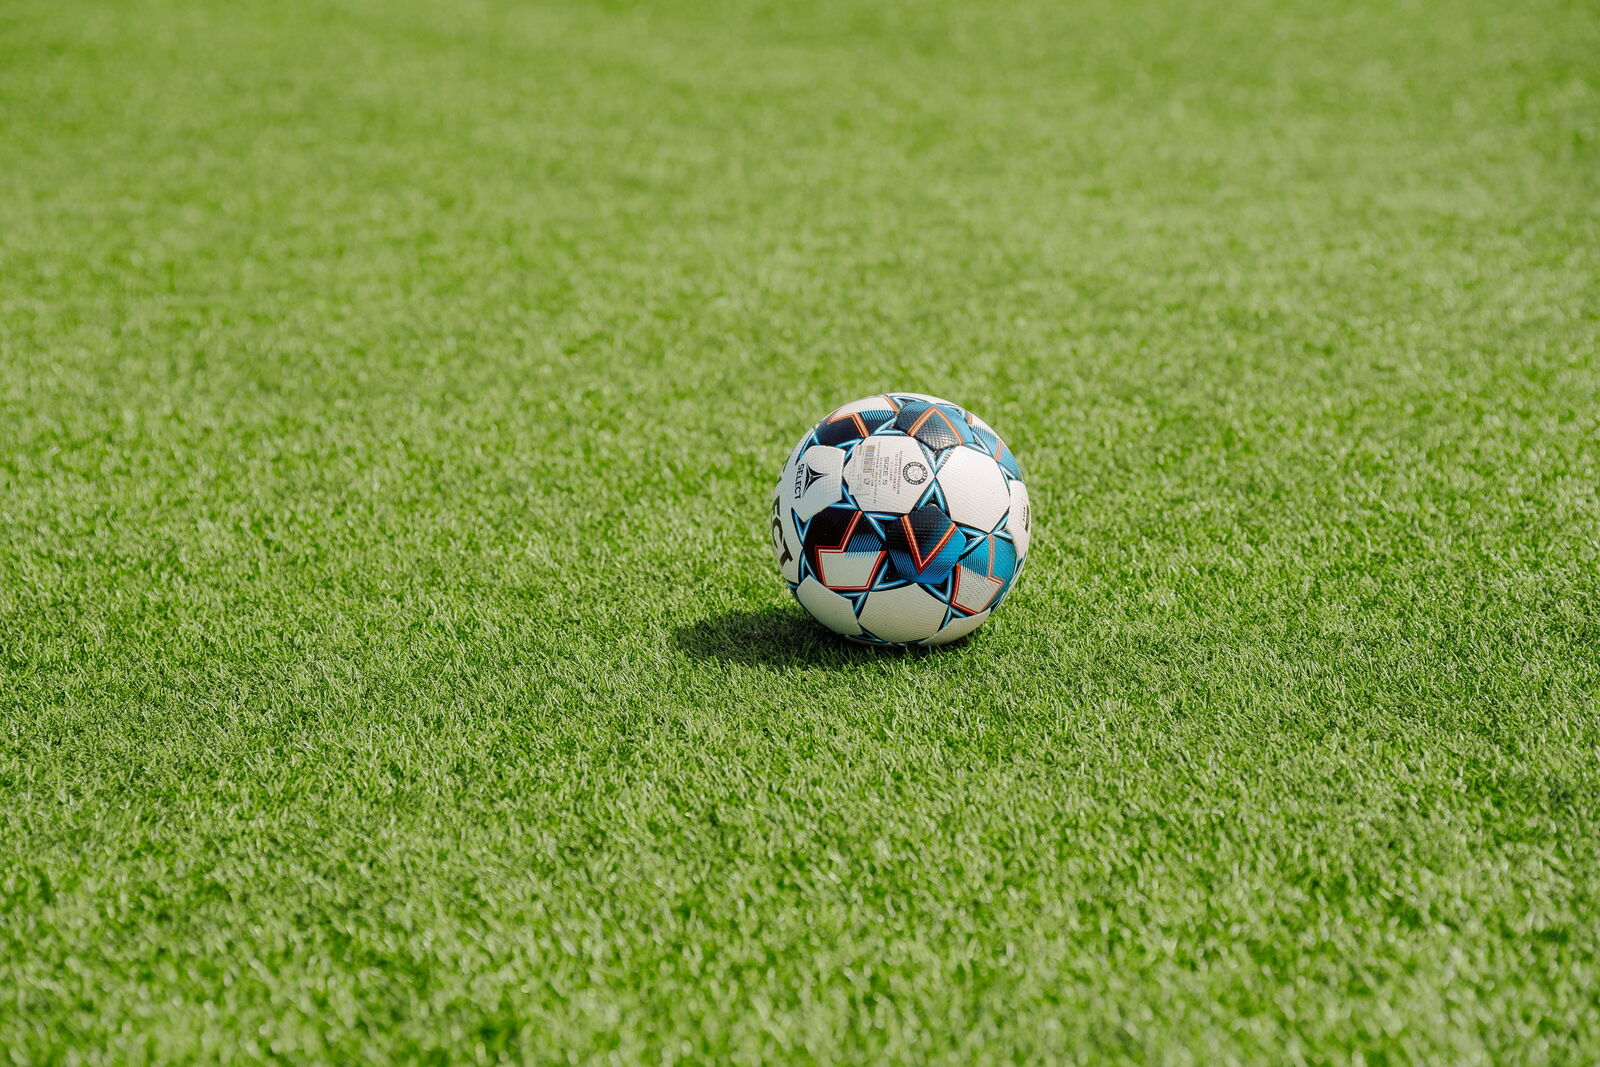 ball on green turf field